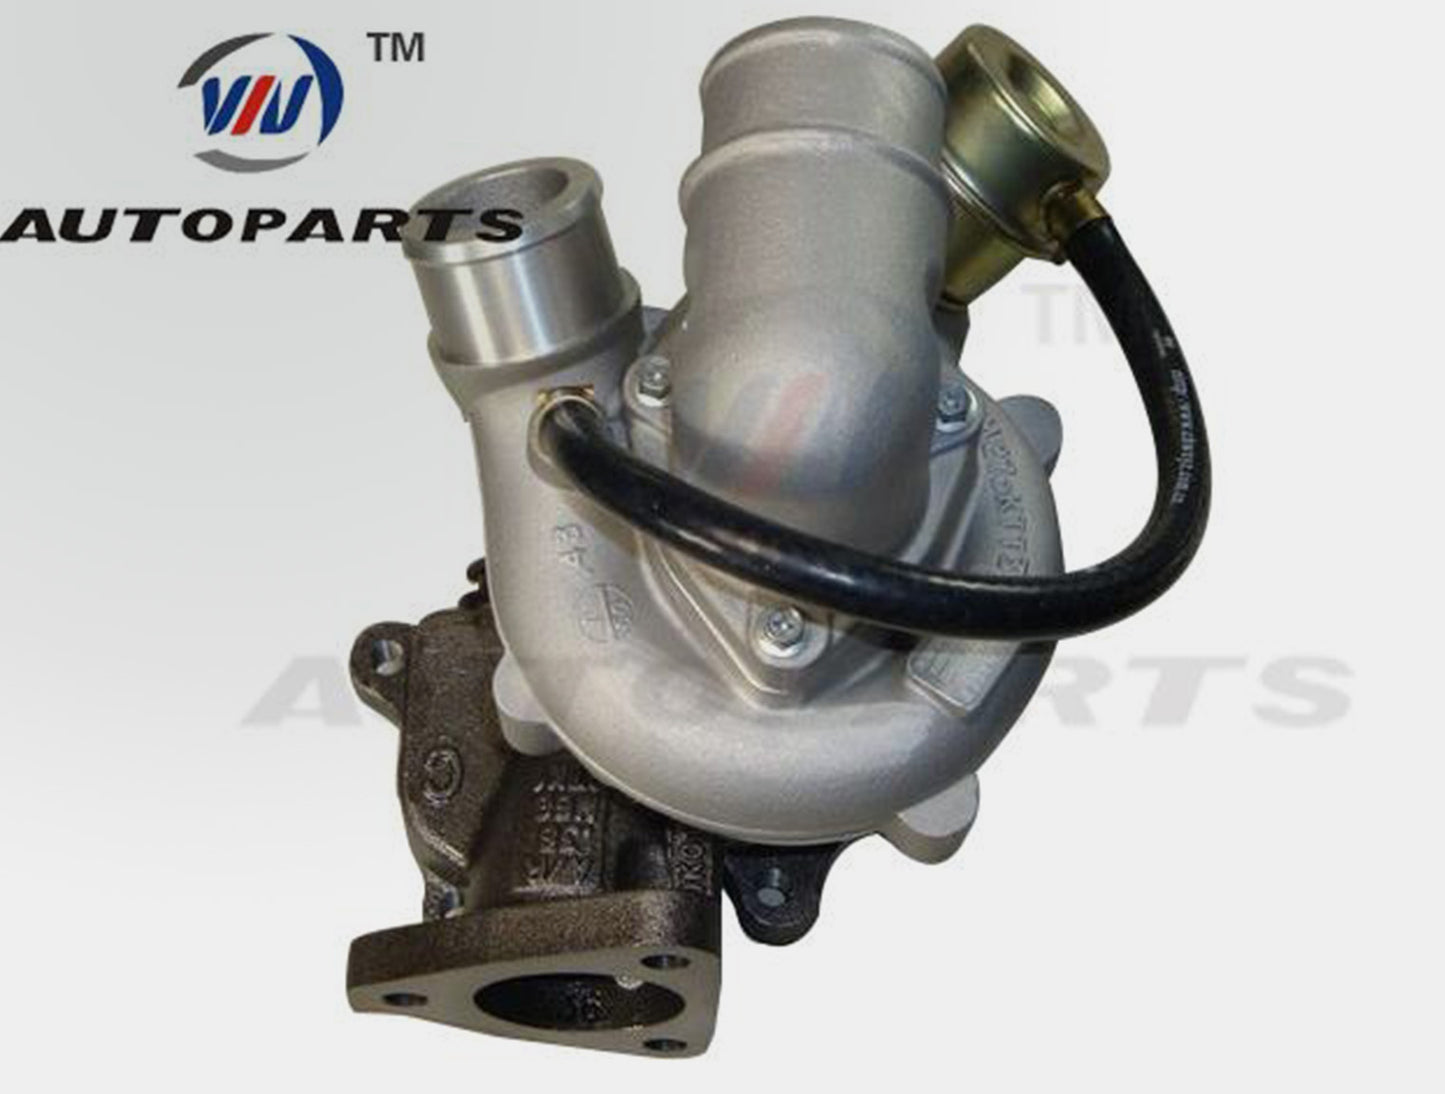 Turbocharger GT1749S 715924-5002S for Hyundai Truck, Van 2.5L 100HP 2.5L Diesel Engine